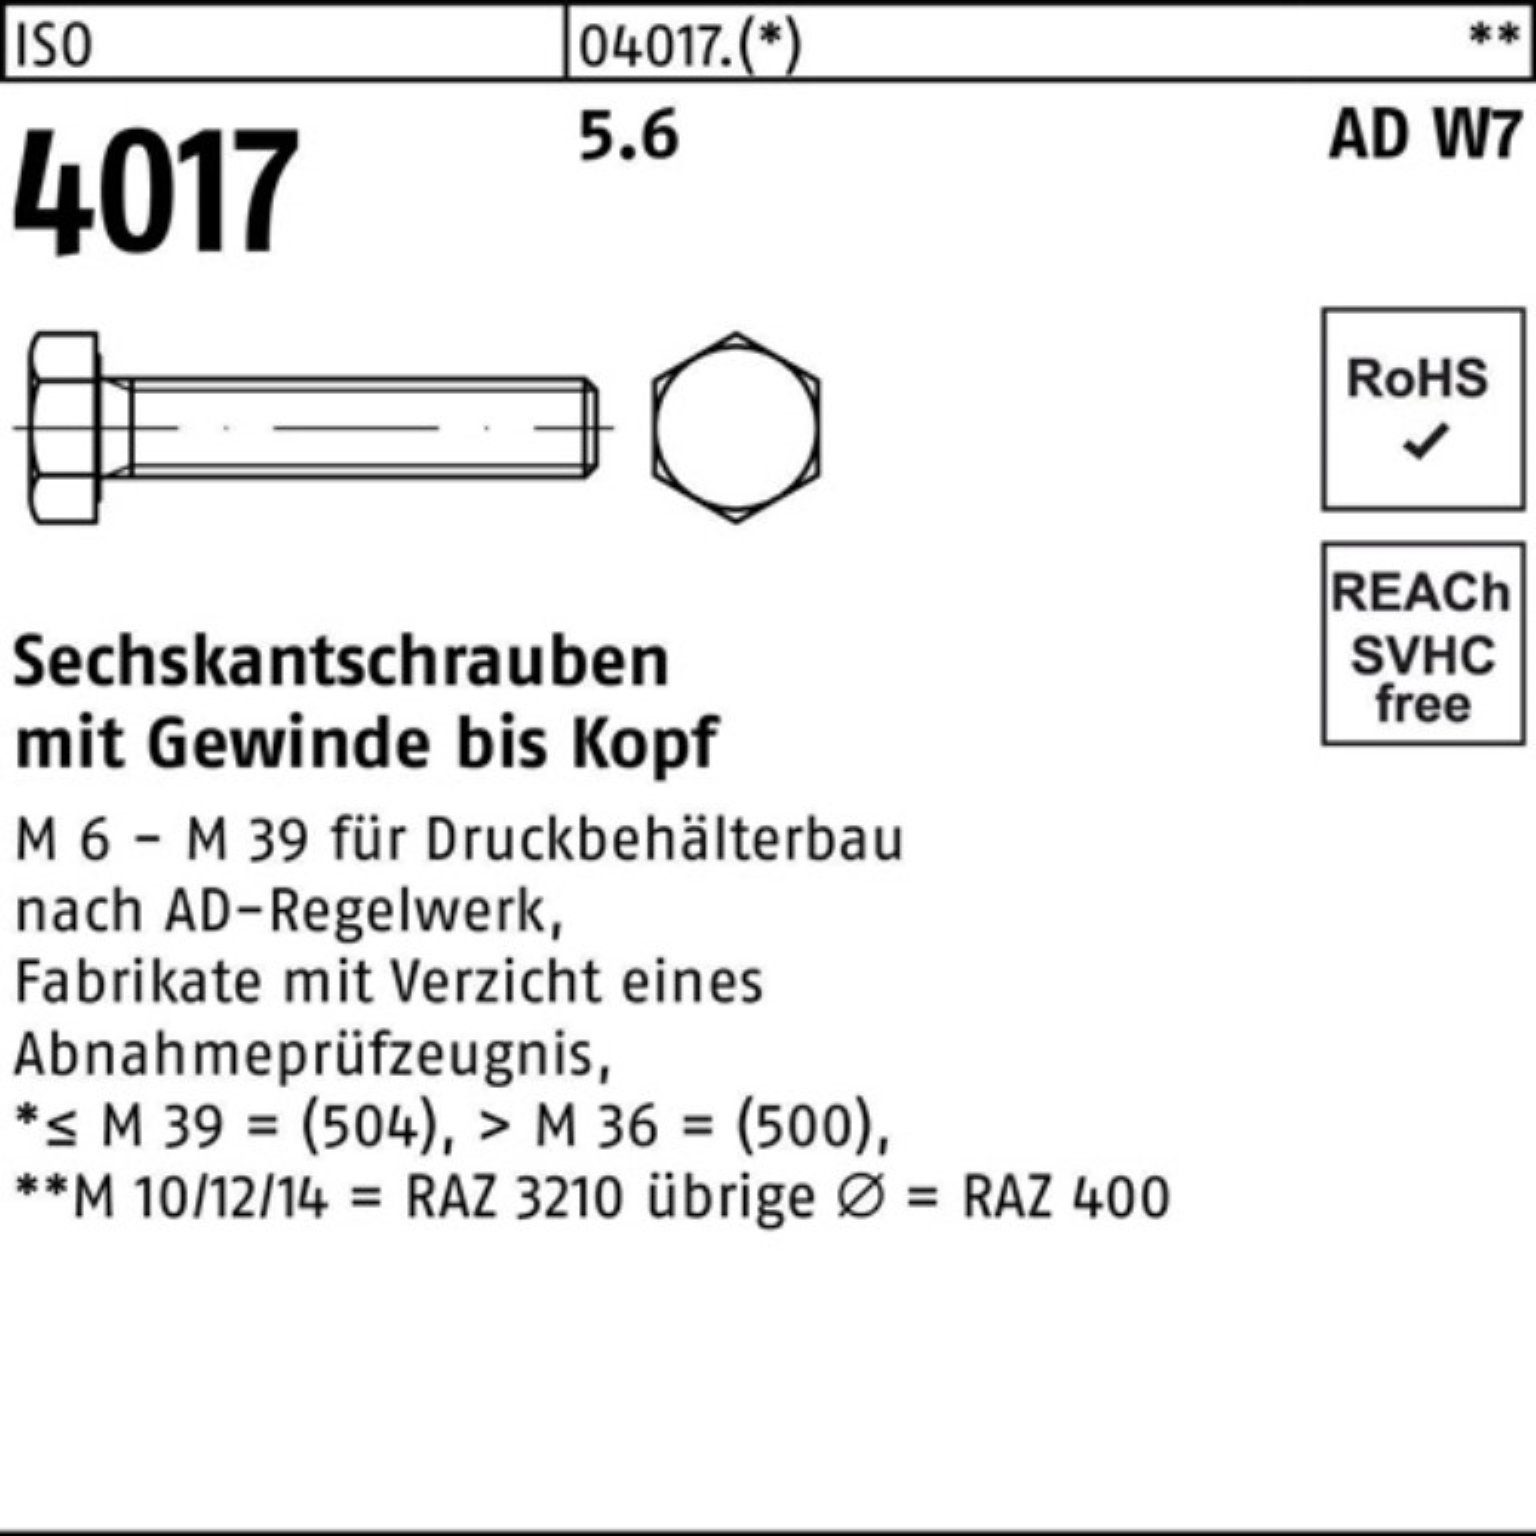 Bufab Sechskantschraube 100er Pack Sechskantschraube ISO 4017 VG M12x 70 5.6 AD W7 50 Stück I